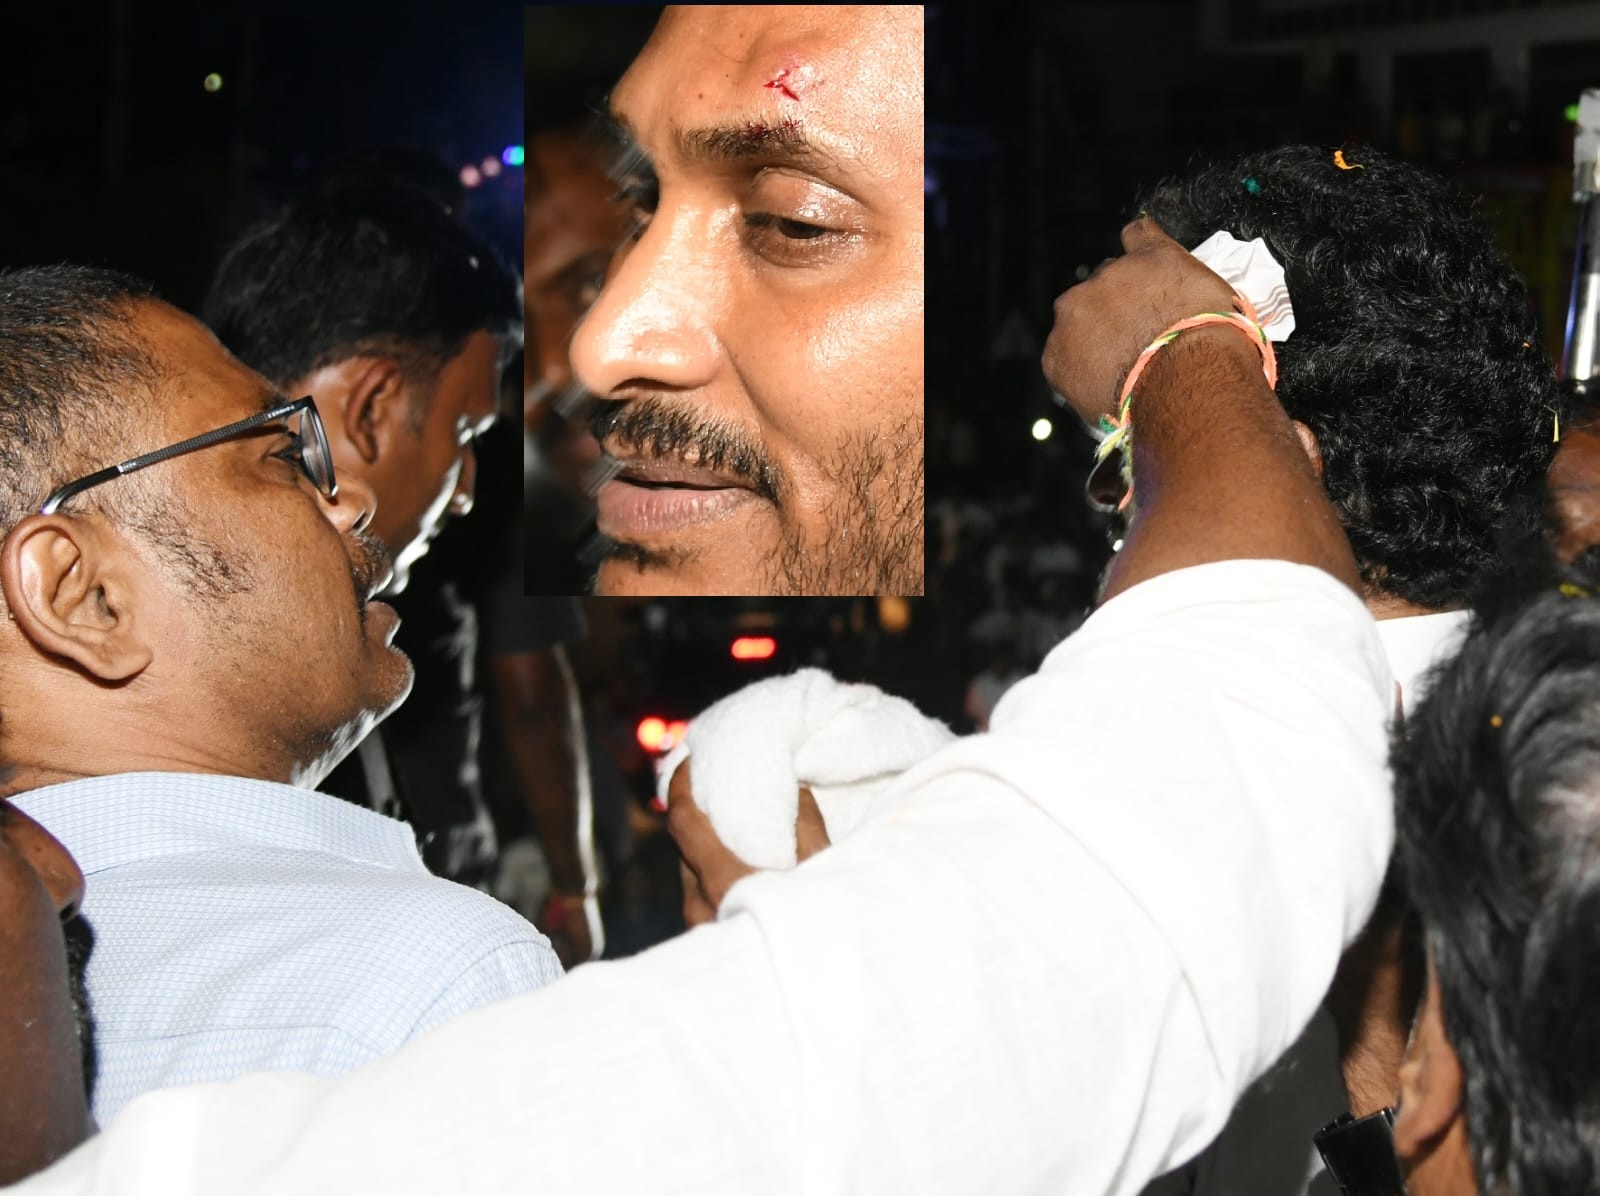 YS Jagan Injured: ఏపీ సీఎం జగన్ పై రాయితో దాడి, ఎడమ కంటిపైన గాయం - చంద్రబాబు చేయించారని వైసీపీ మండిపాటు